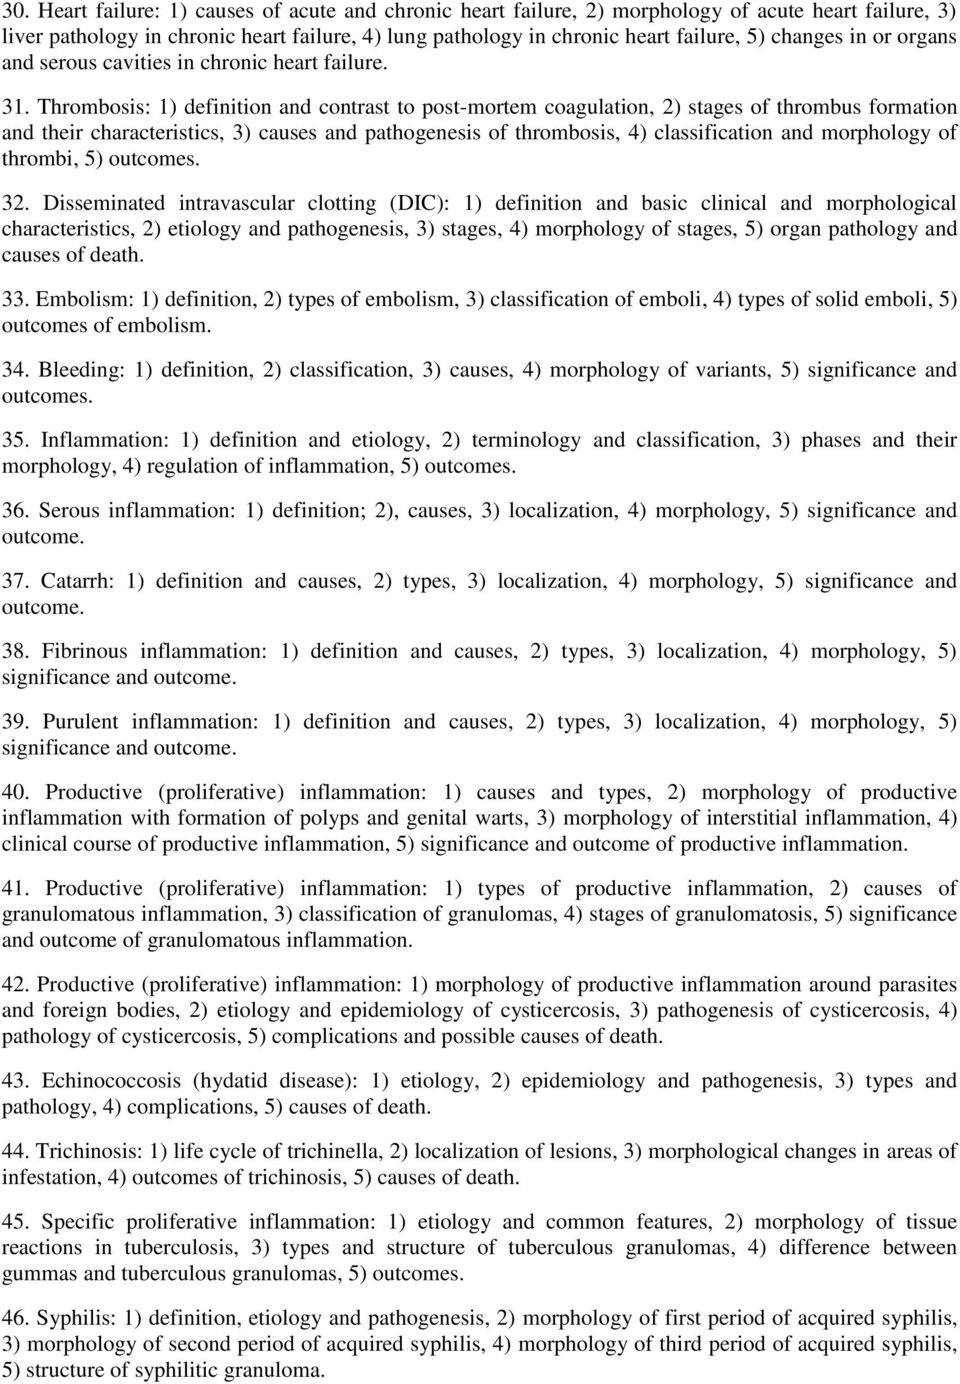 Concise pathology for Exam preparation byGeetika Khanna Bhattacharya 3rd Edition Ebook PDF